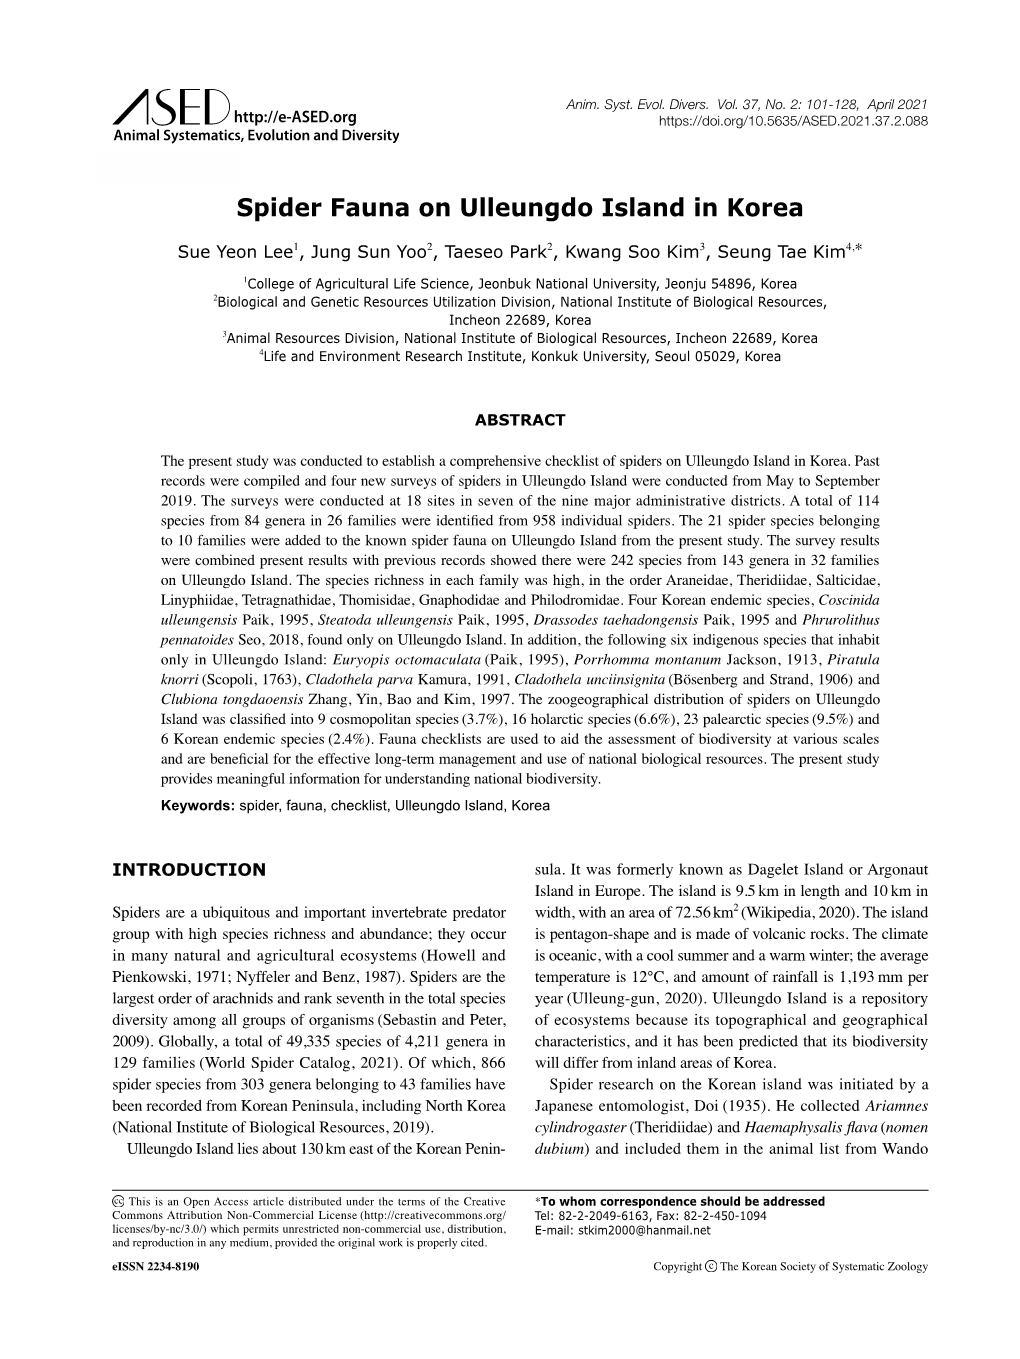 Spider Fauna on Ulleungdo Island in Korea